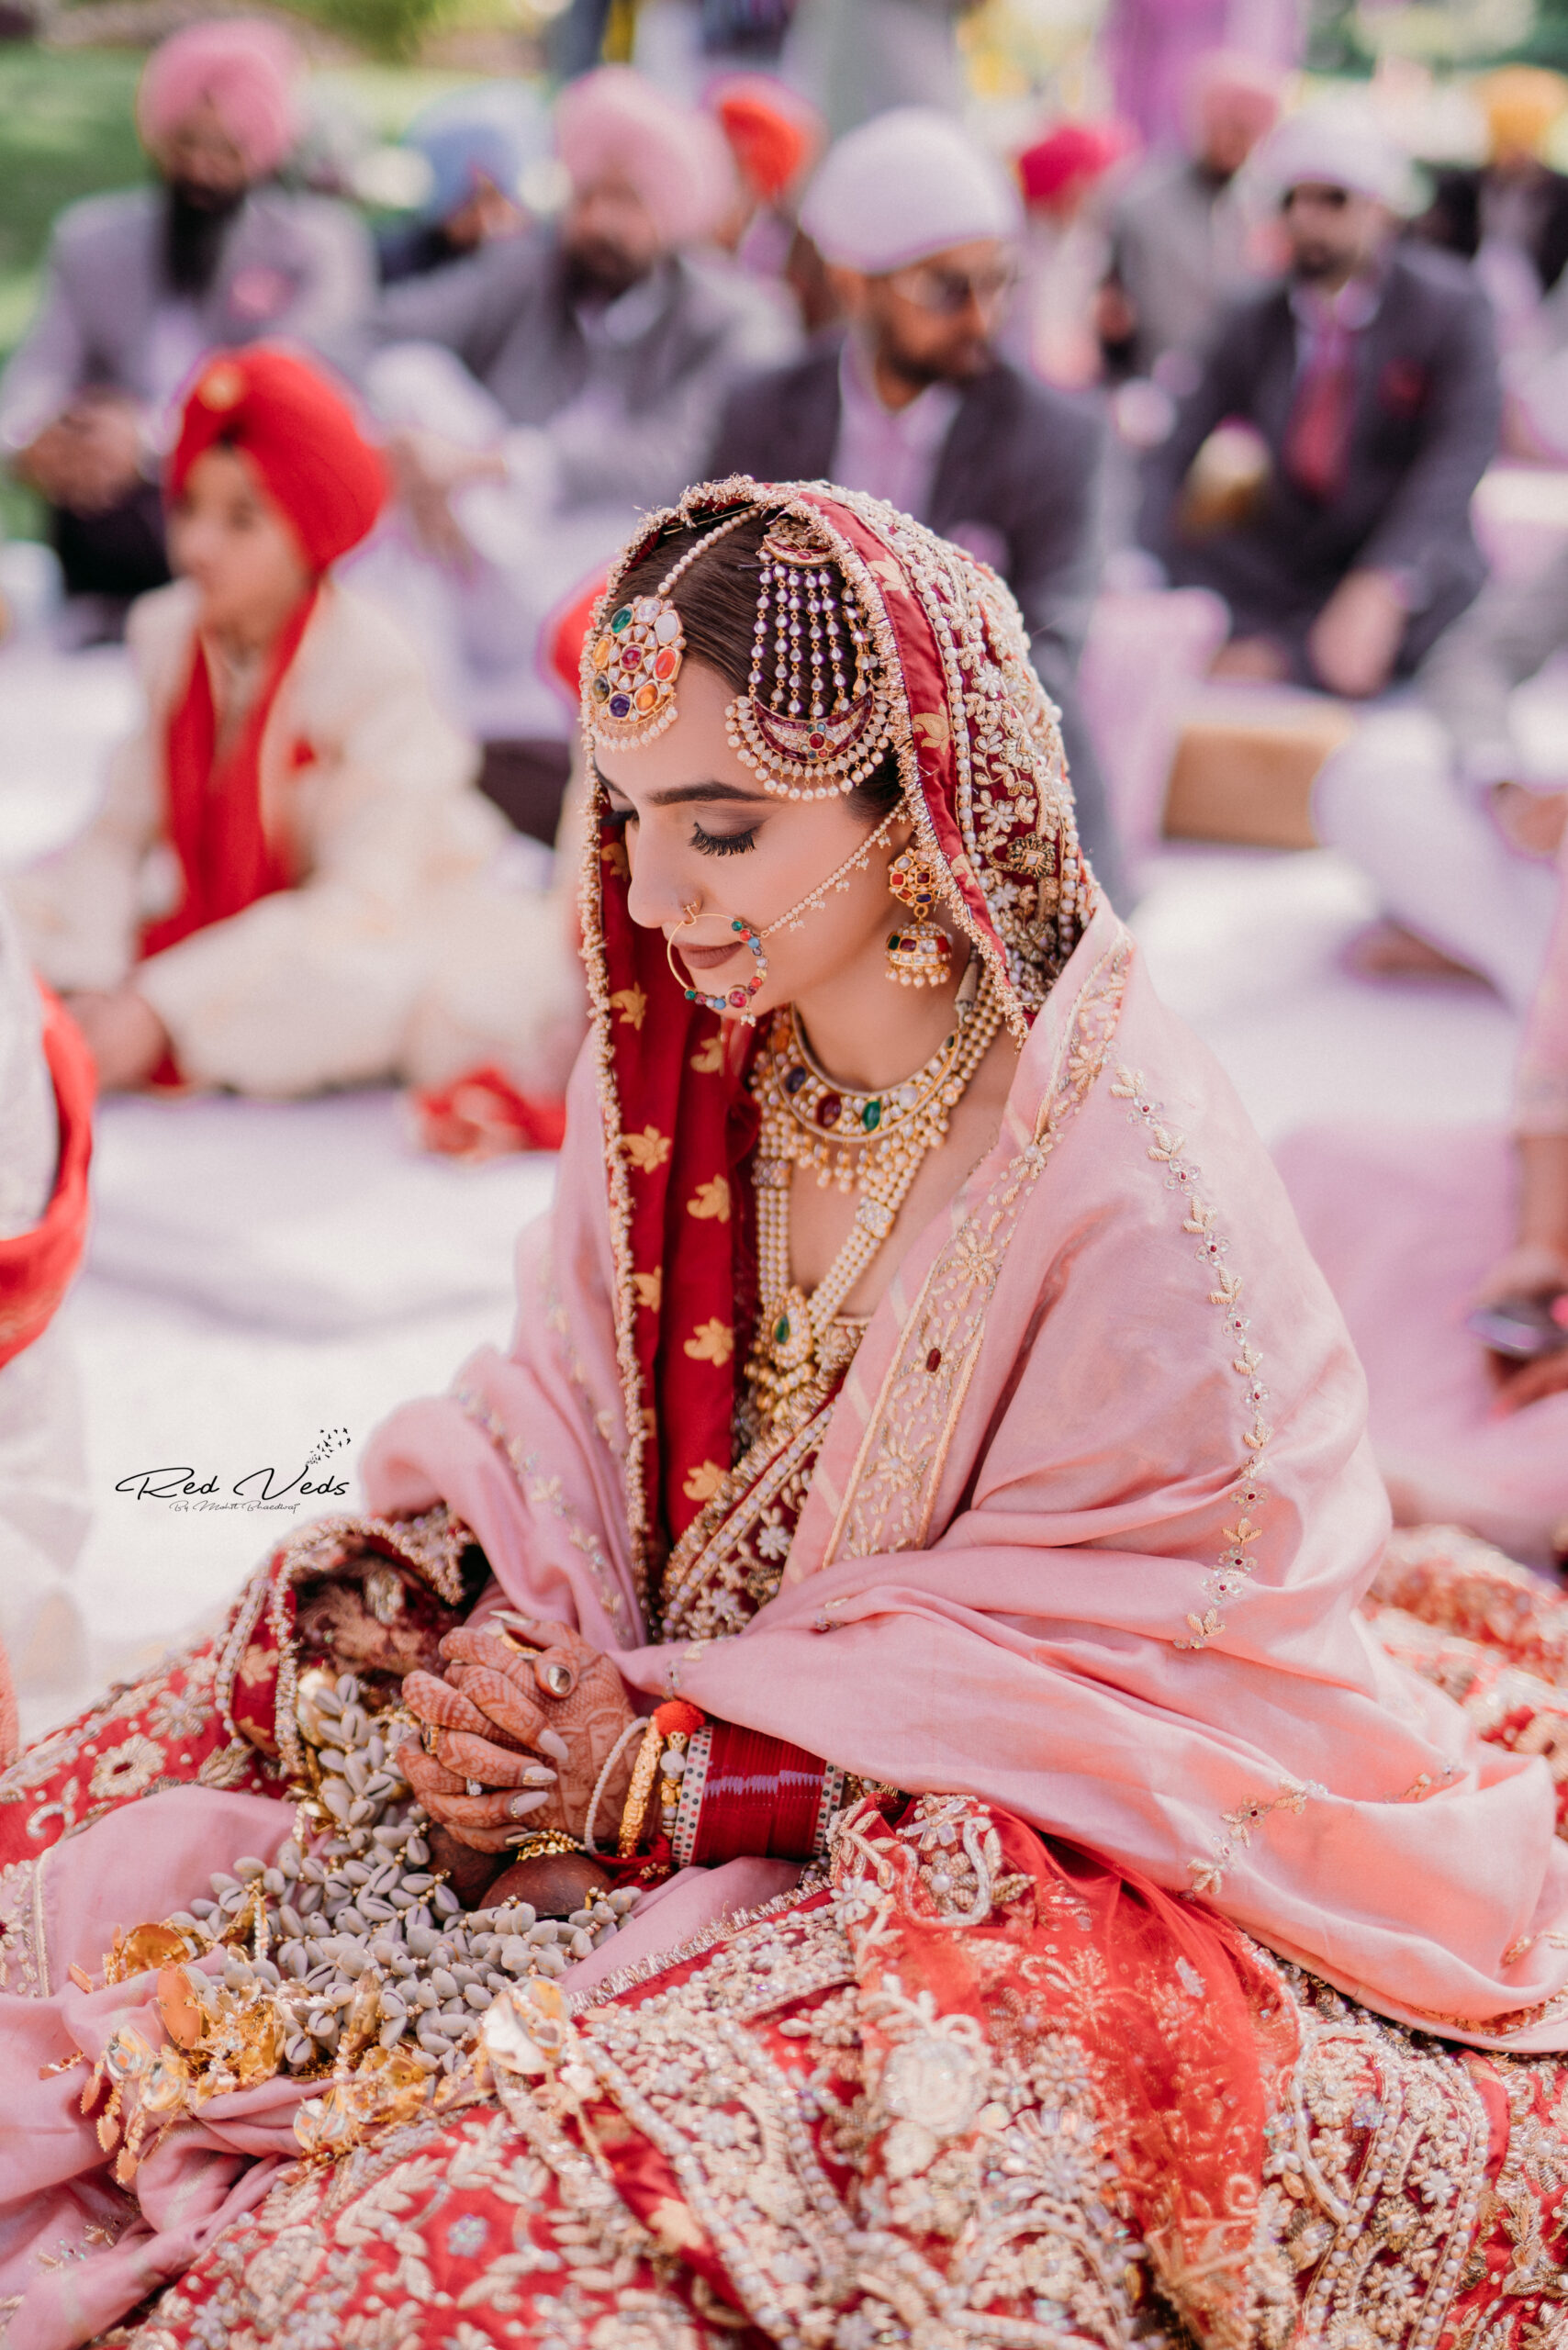 Hindu Wedding Photography Poses - Beautiful Poses For A Hindu Bride